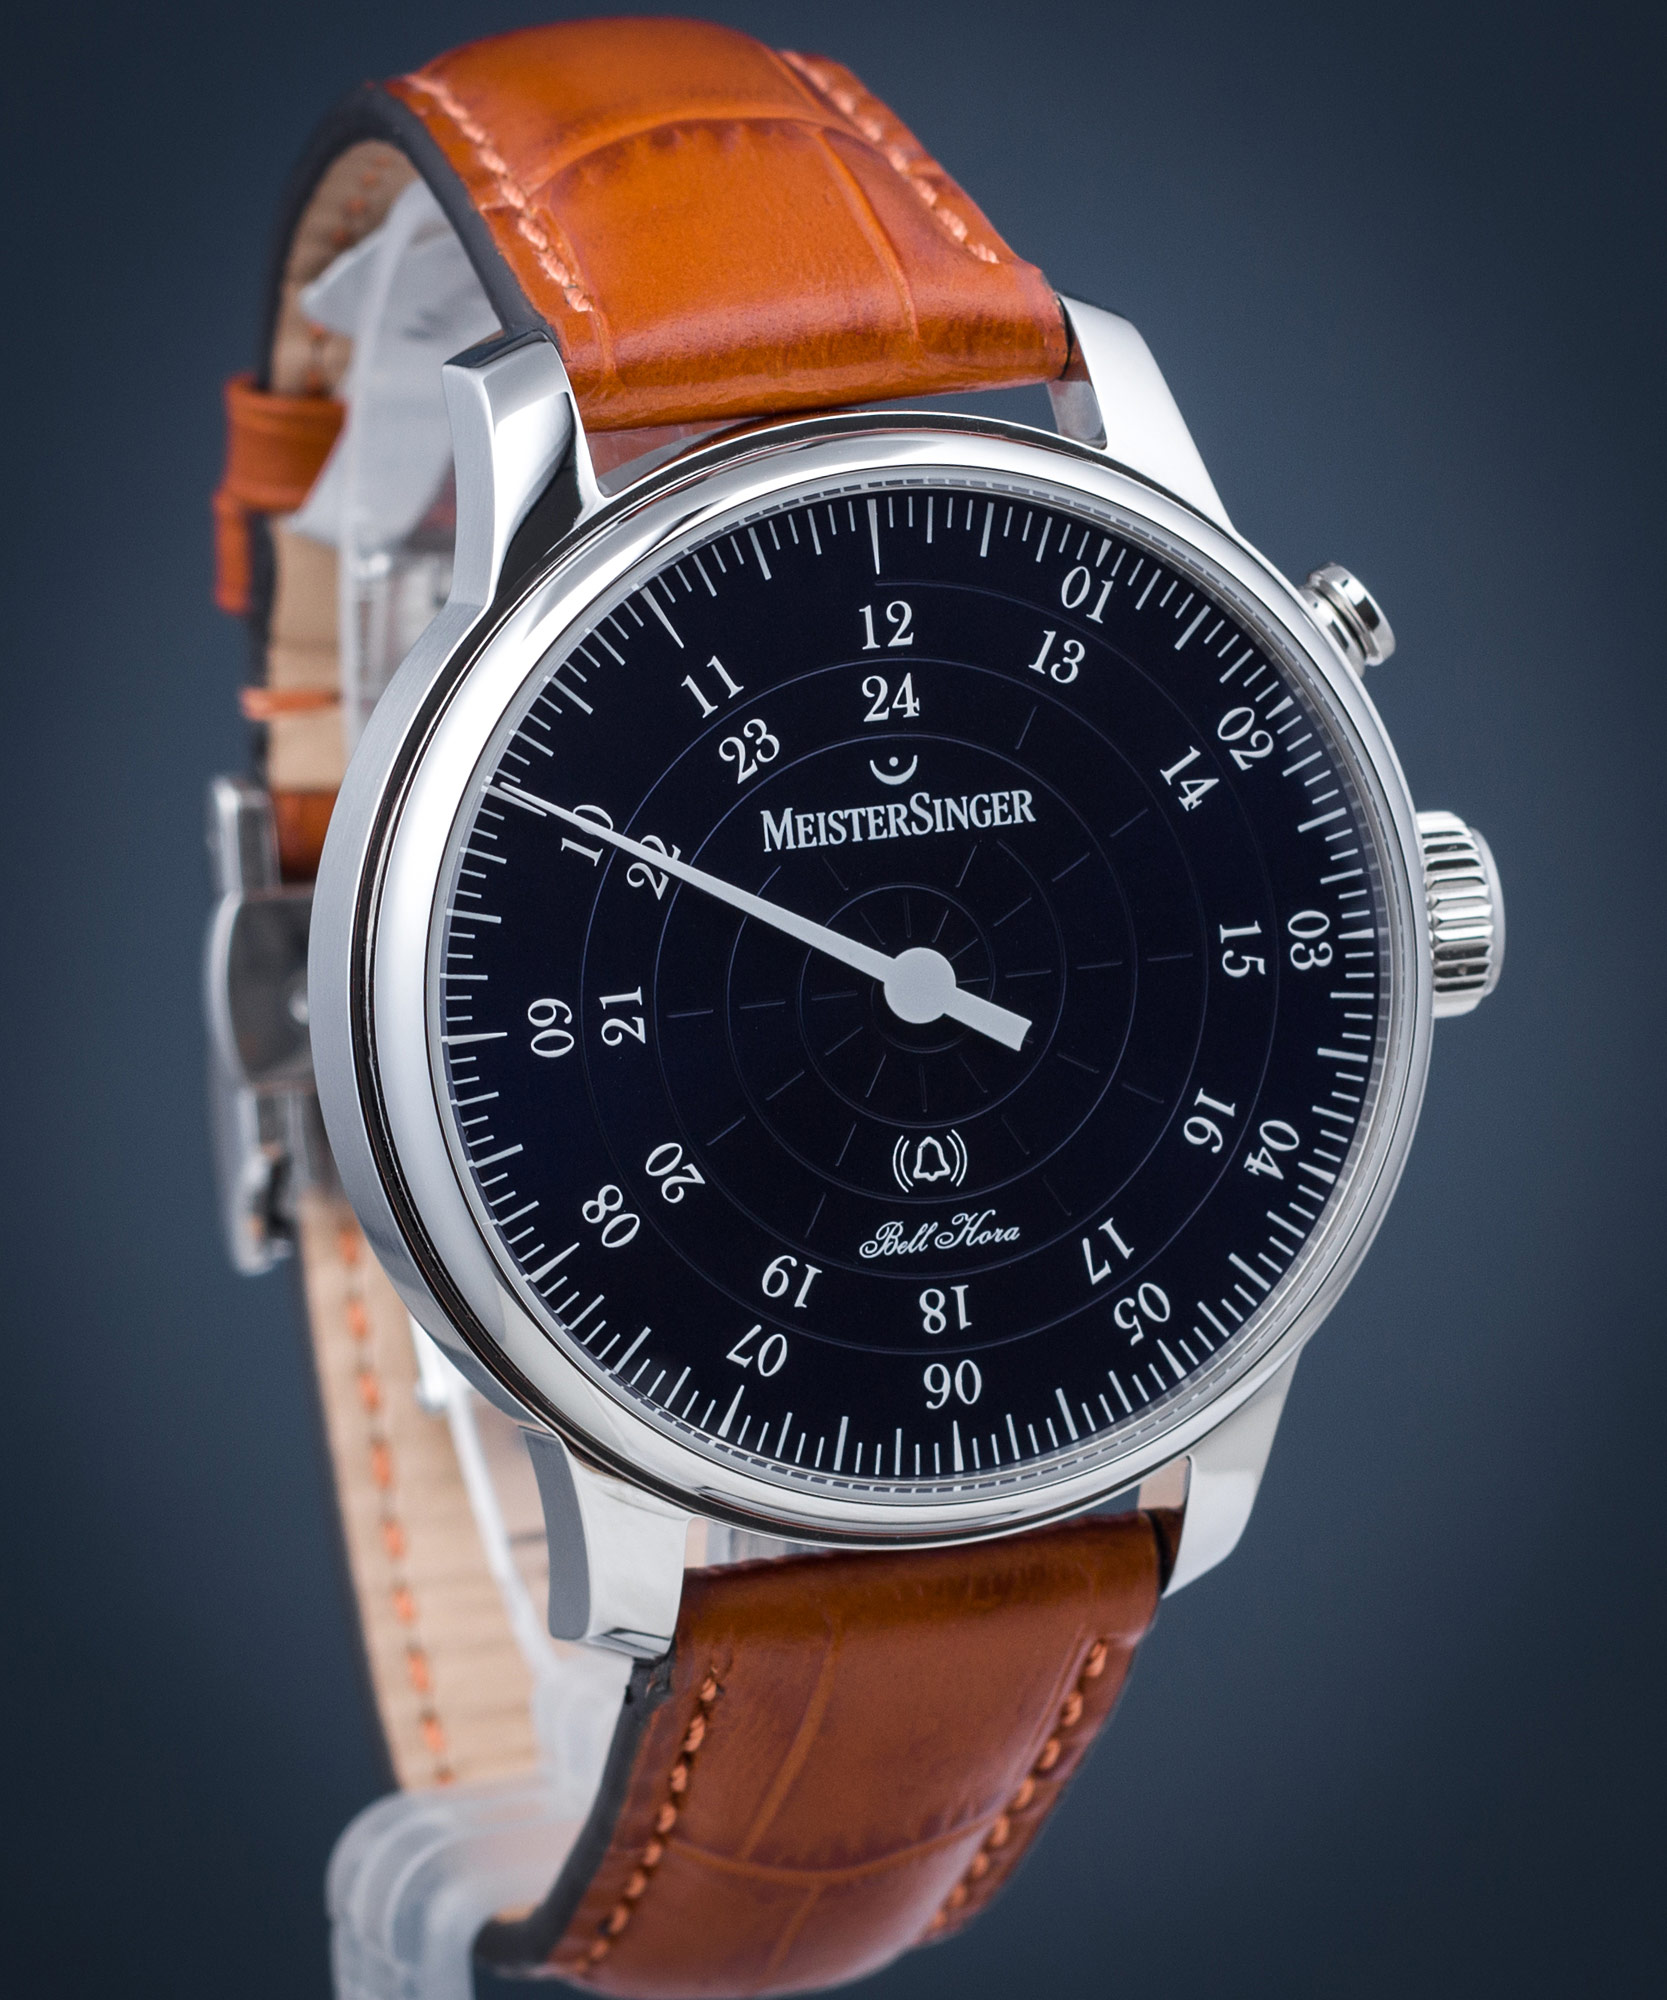 MeisterSinger: The Single Handed Watch